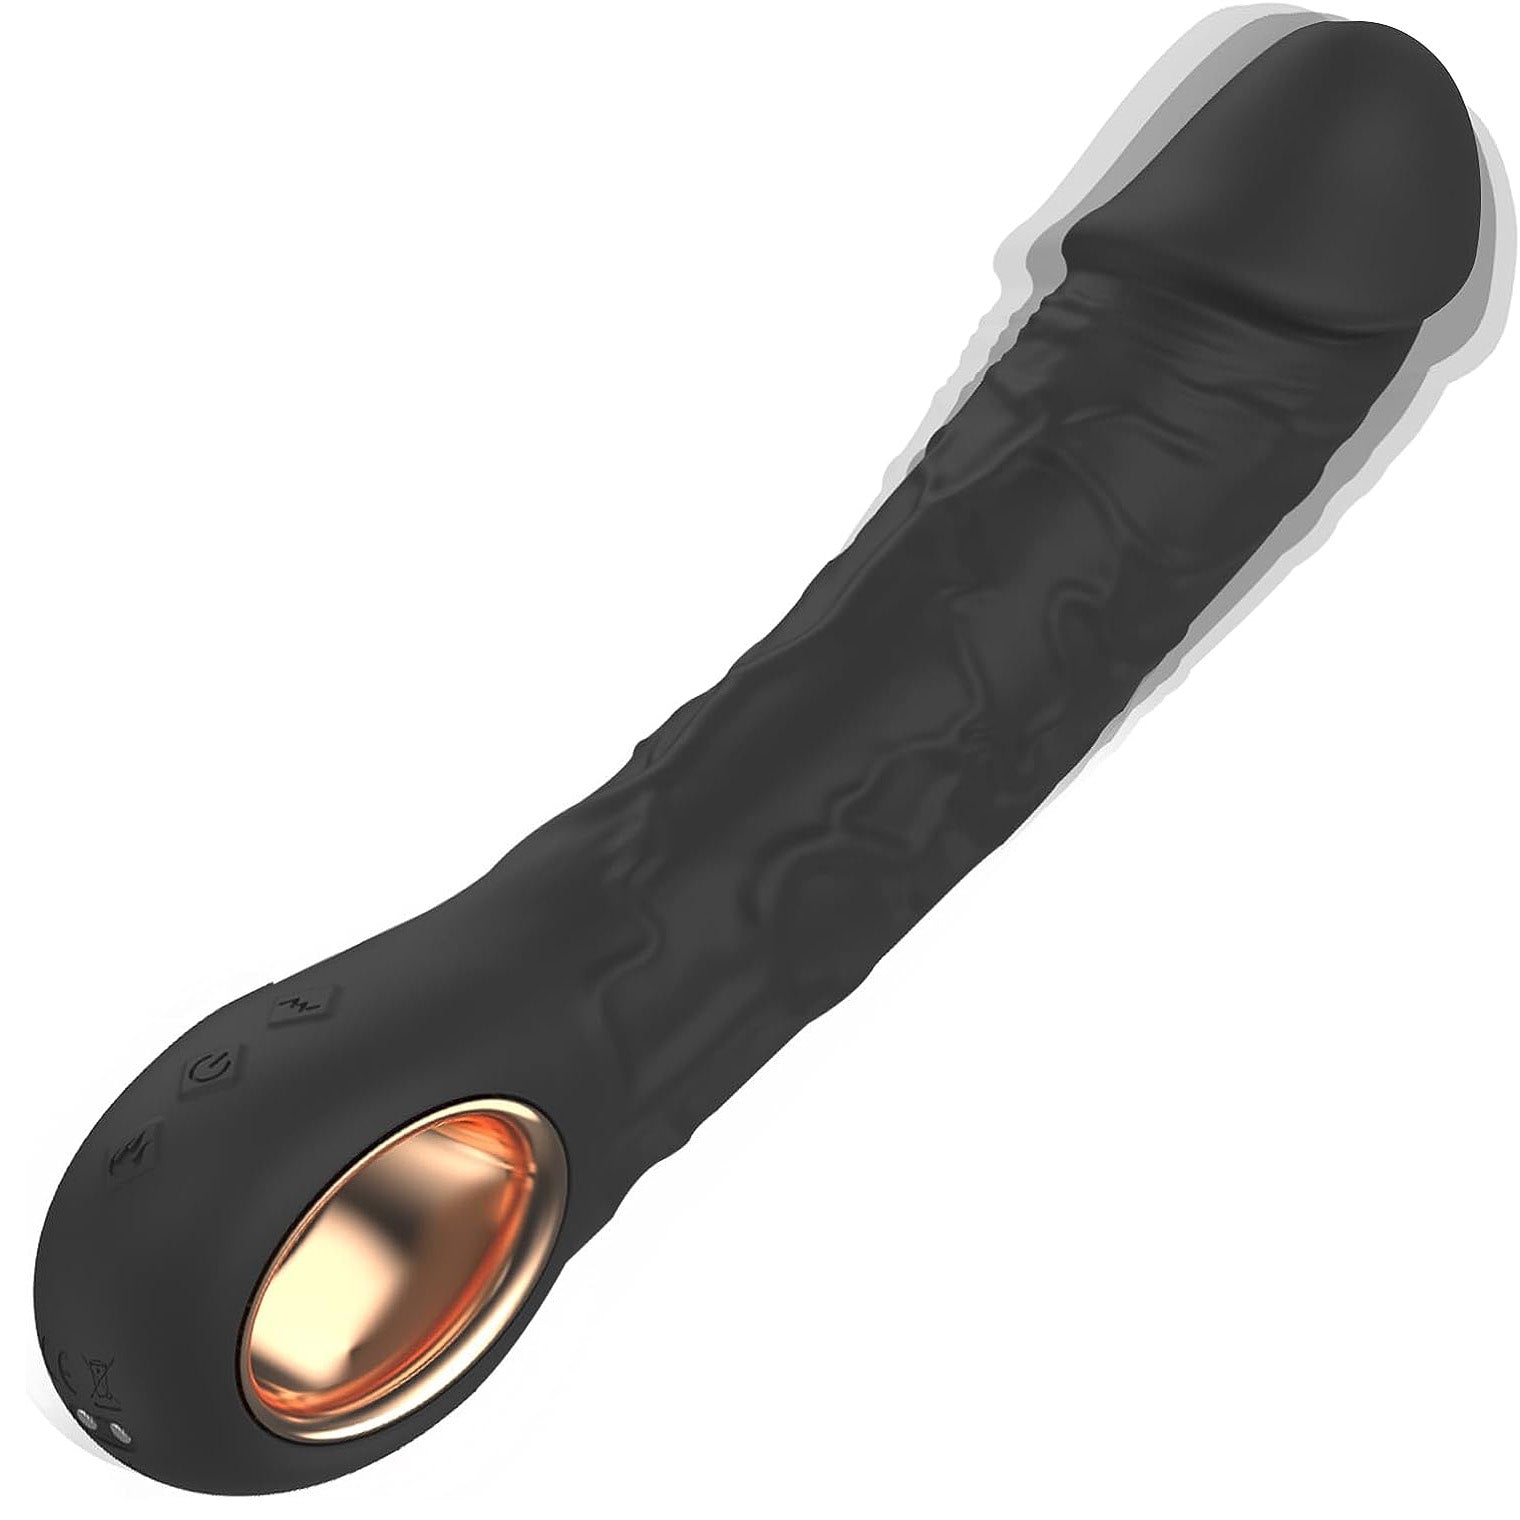 Mira Black Realistic Dildo Vibrator 